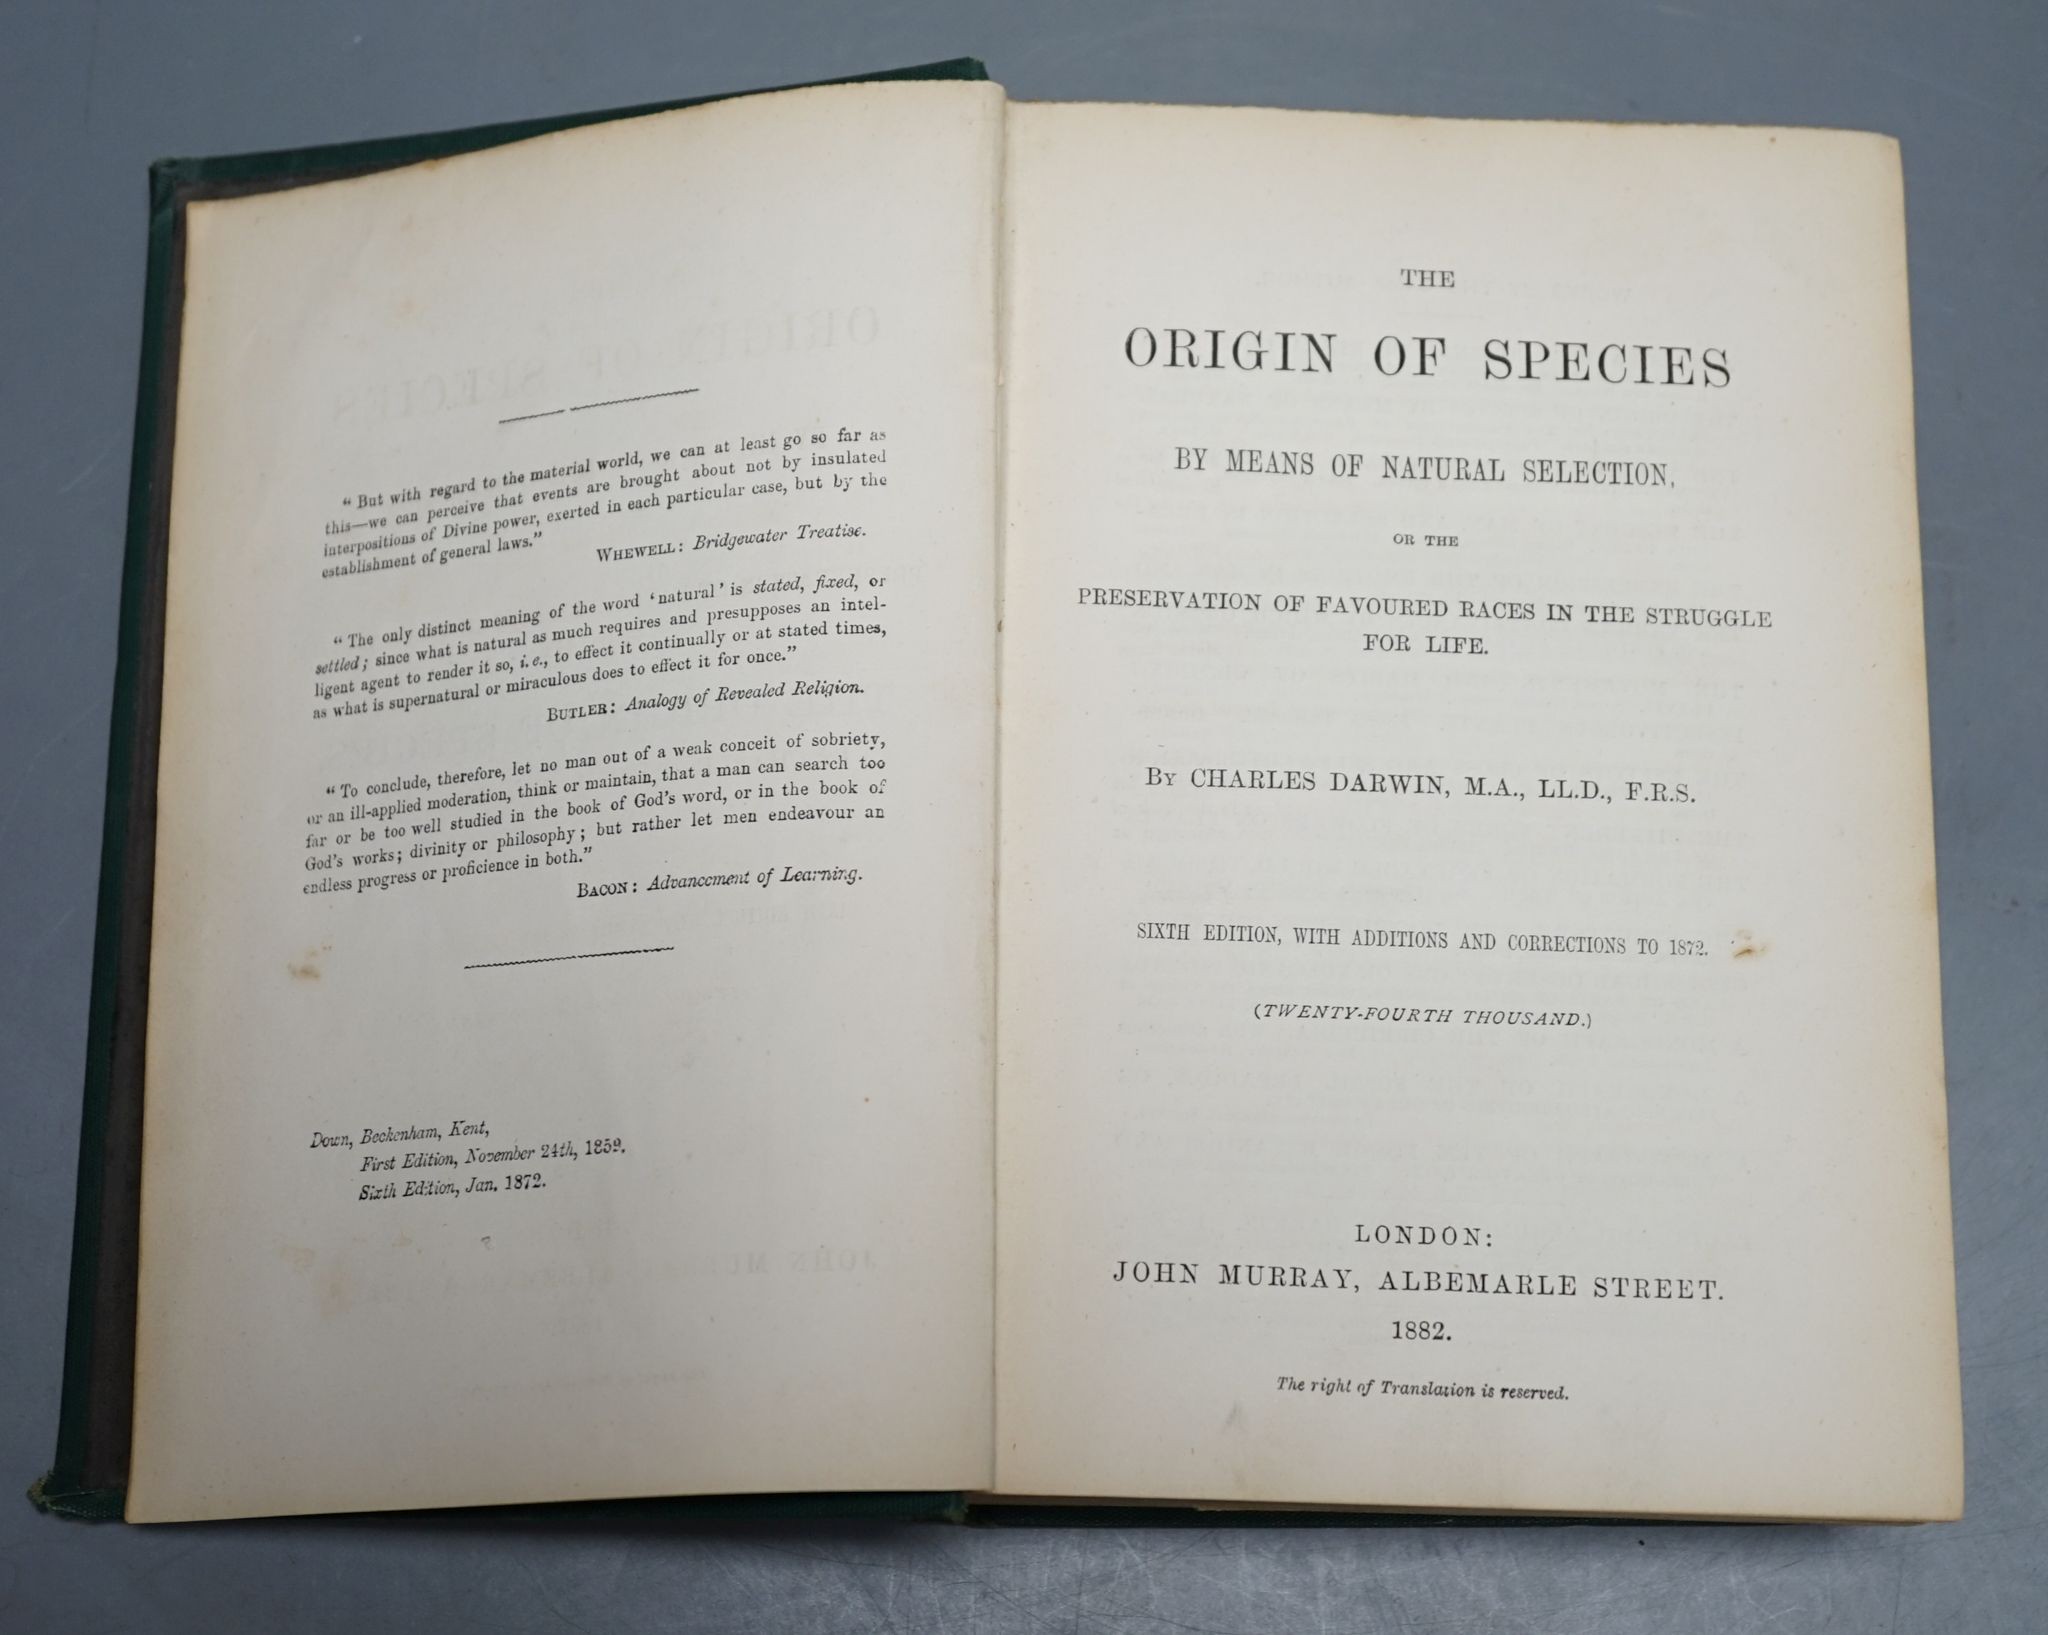 Darwin, Charles - The Origin of the Species, 6th edition, (twenty-fourth thousand), 8vo, original green cloth, John Murray, London, 1882